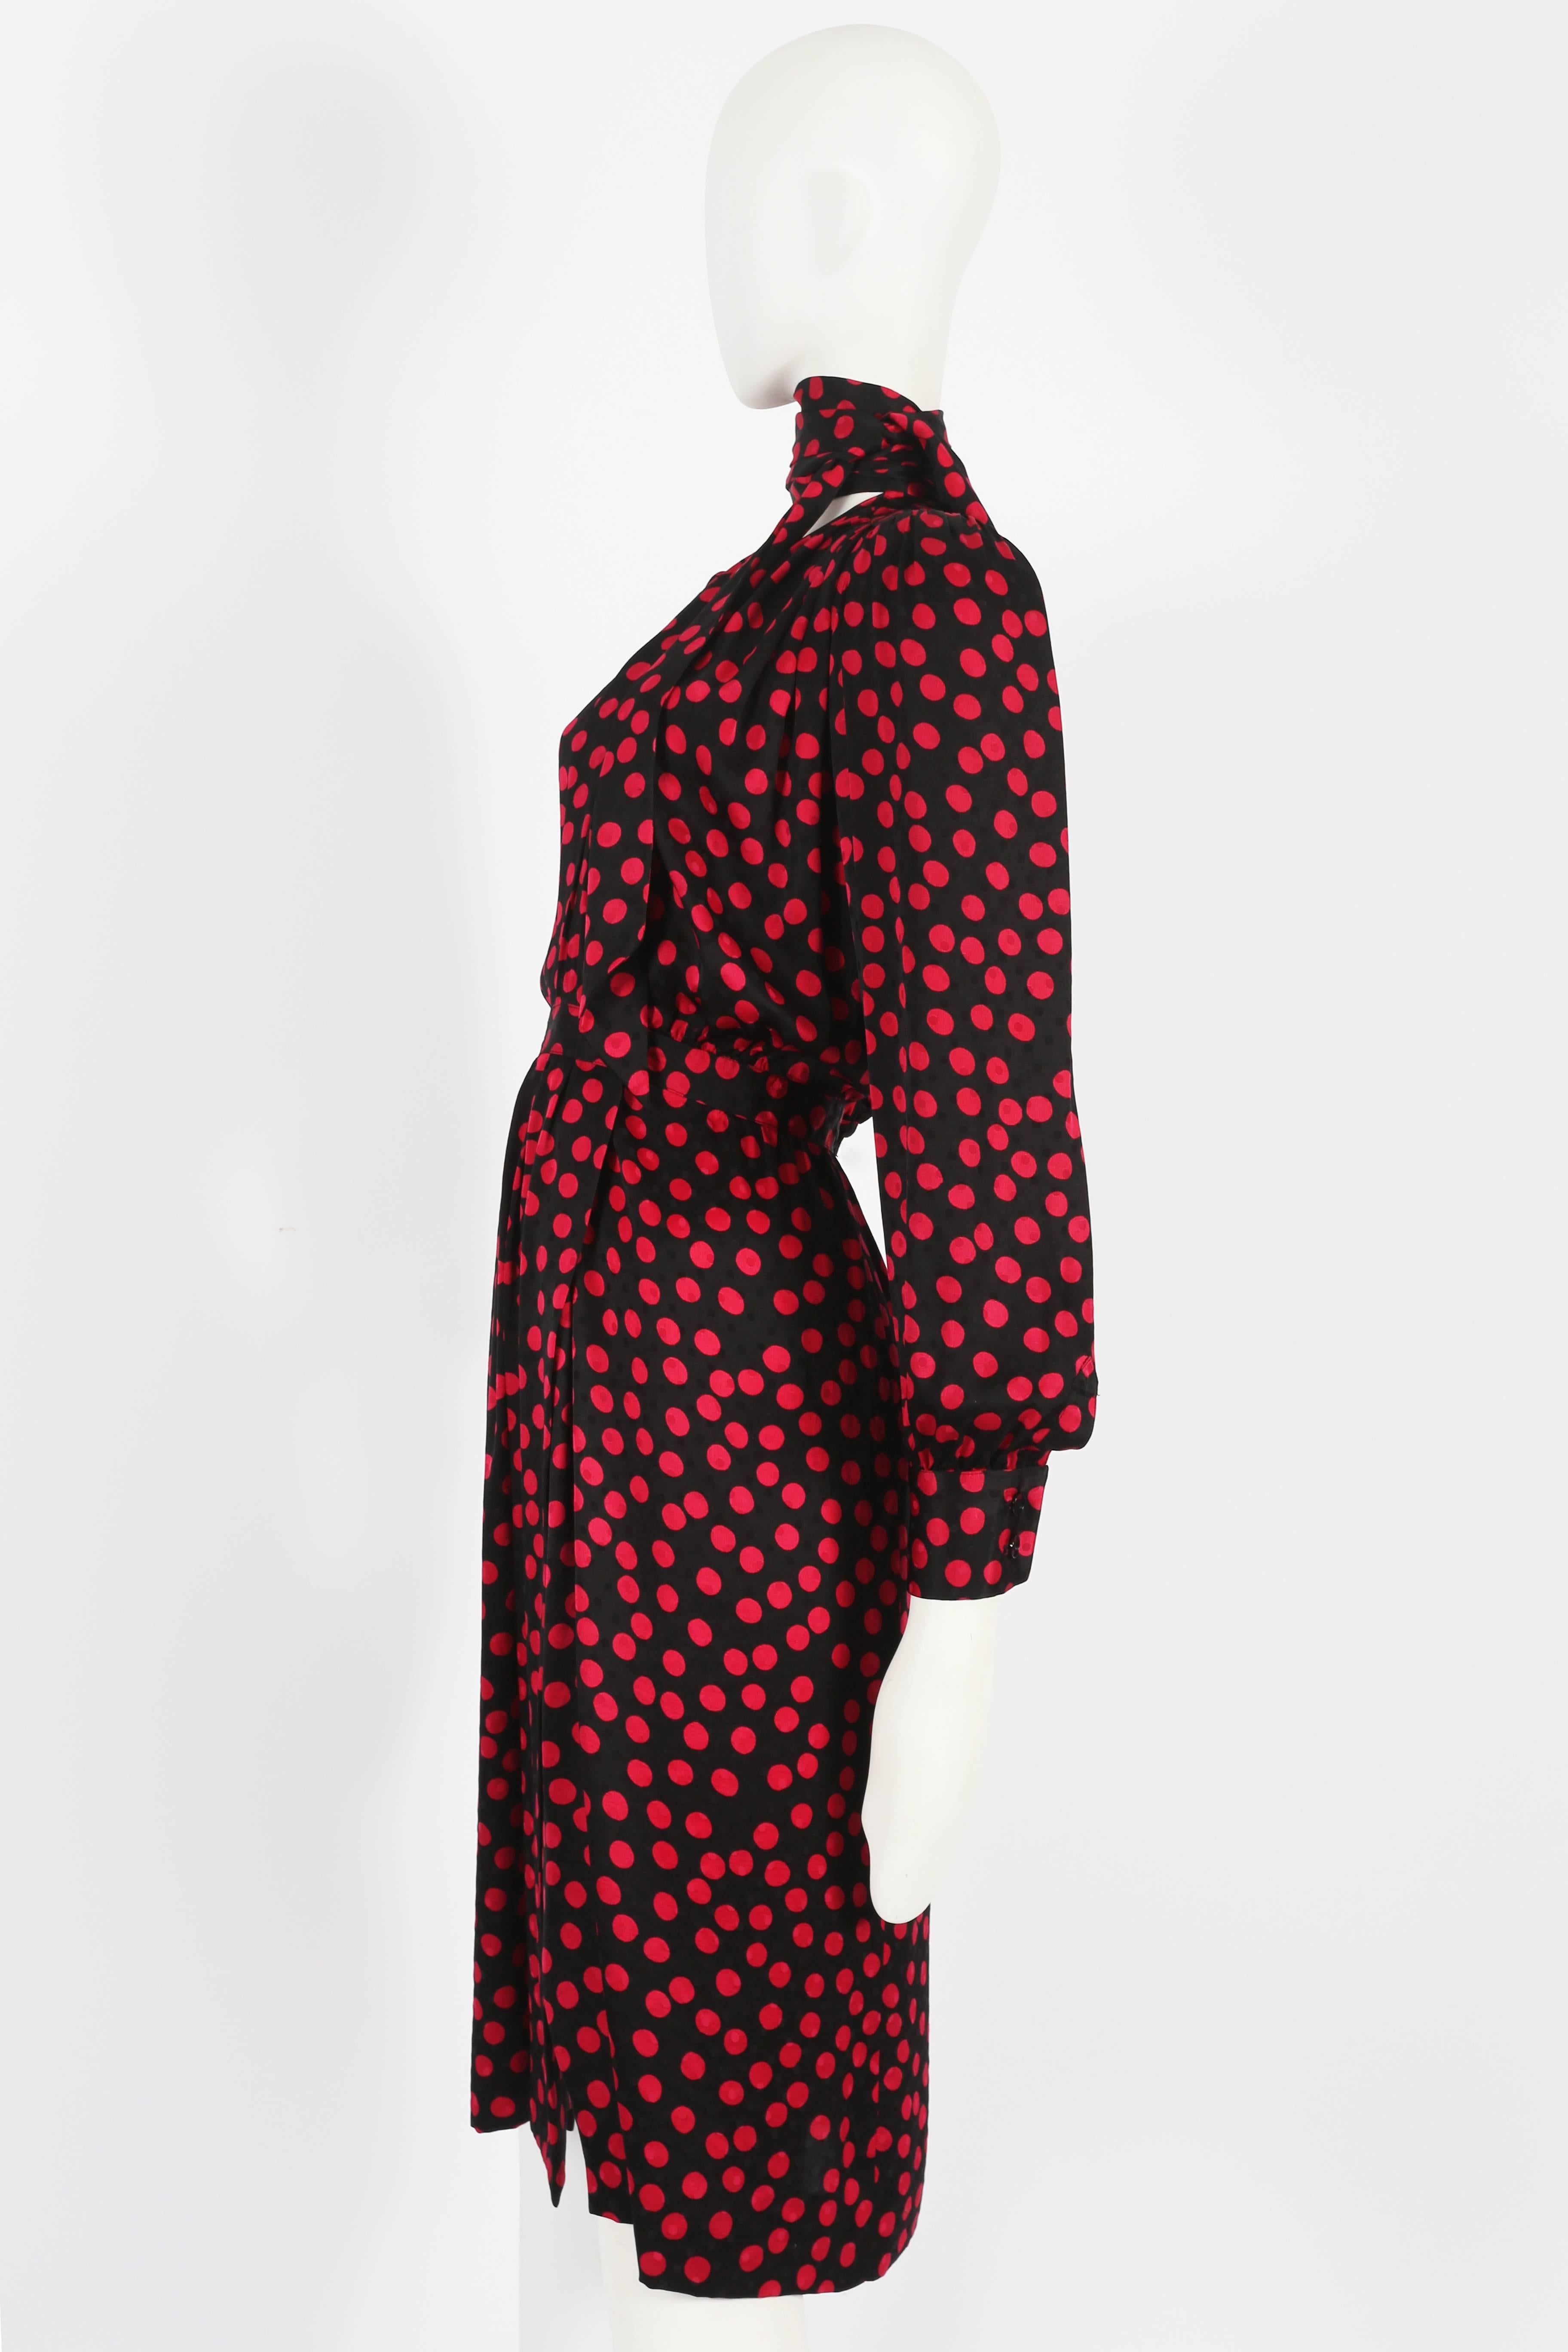 Yves Saint Laurent silk polka dot evening wrap dress, circa 1970s 1